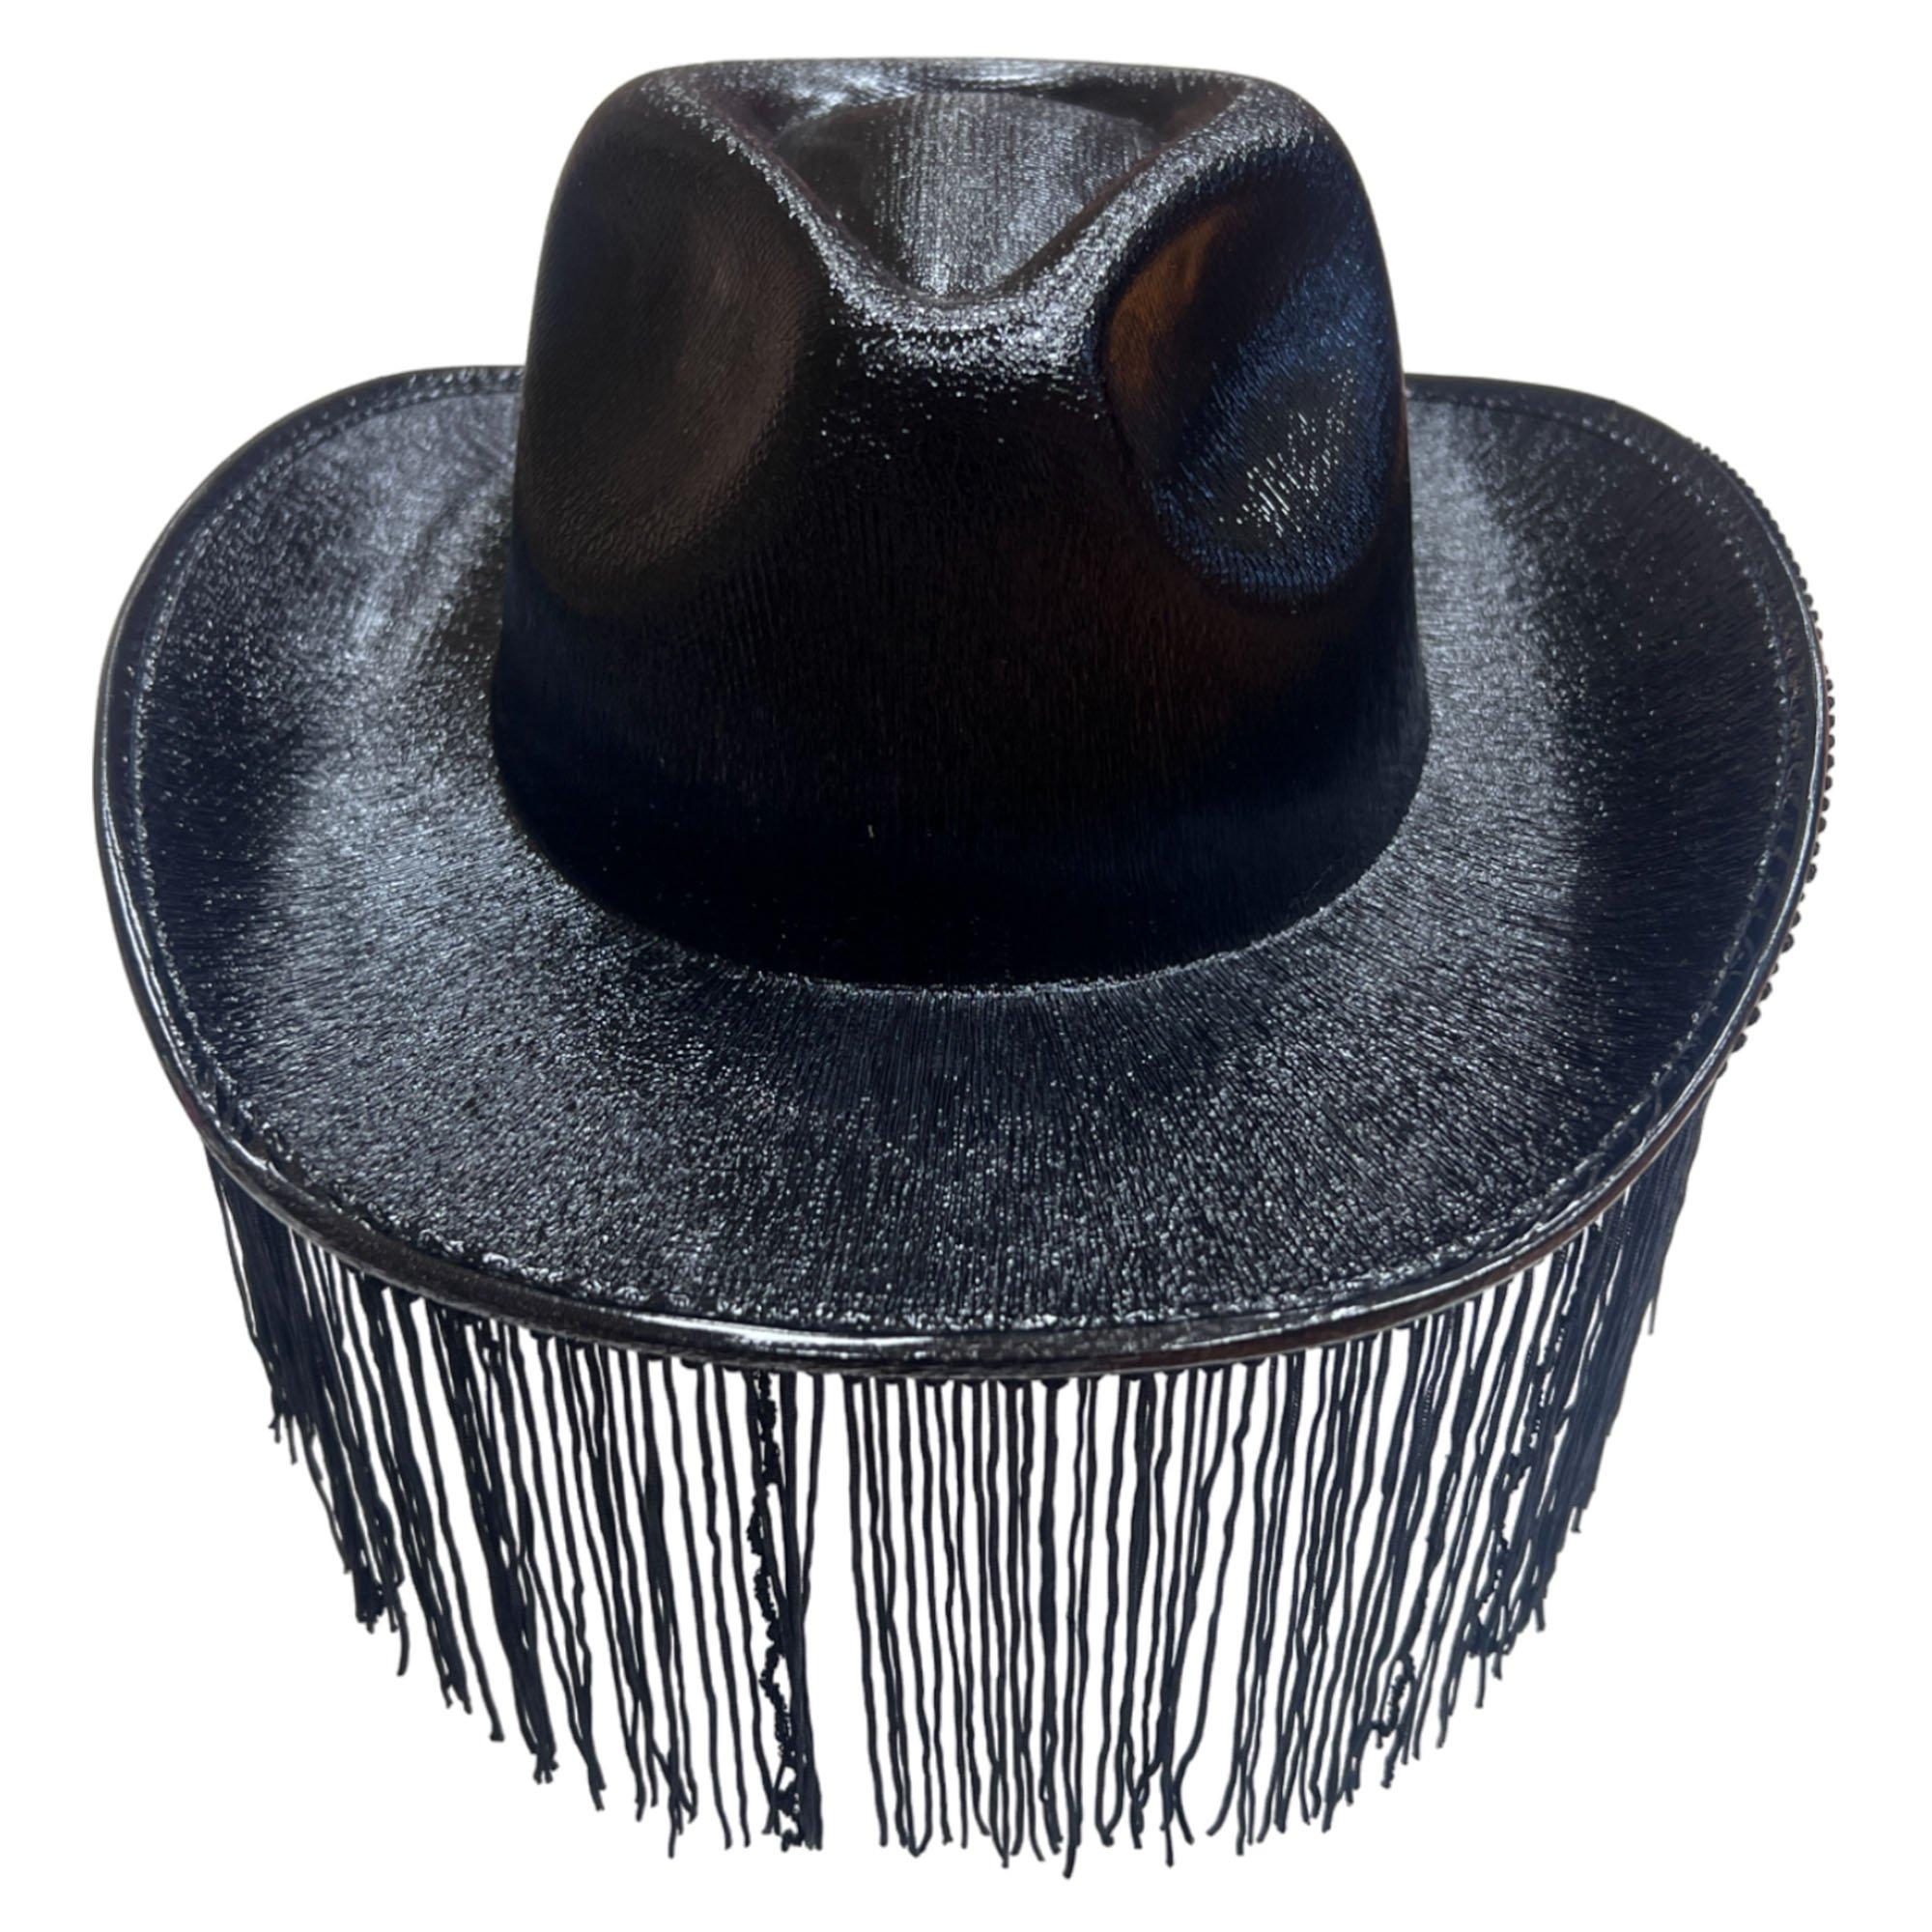 Iridescent Black Cowboy Hat with Fringe